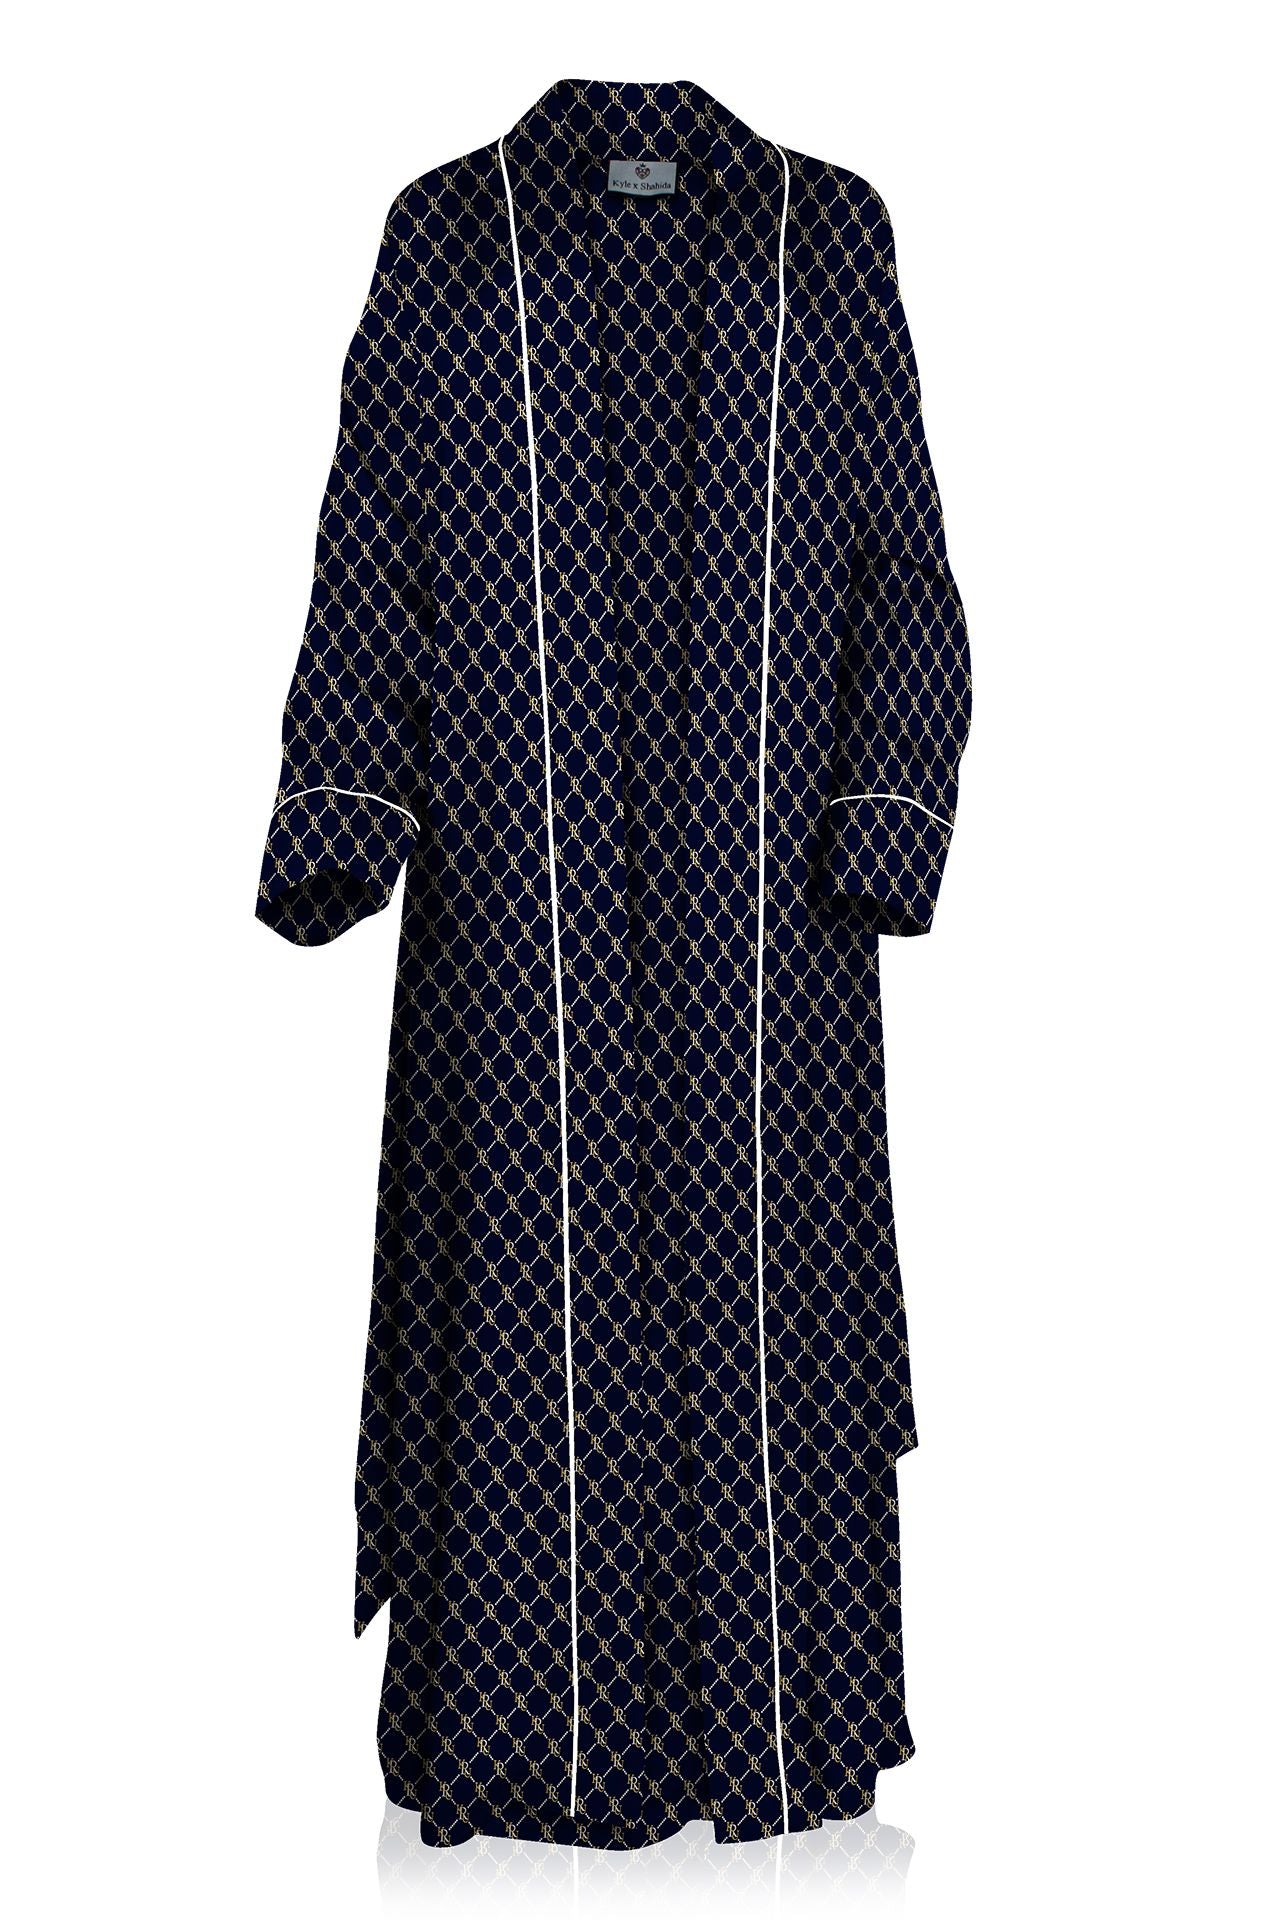 "black silk robe" "designer silk robe" "Kyle X Shahida" "womens long kimono robe" 